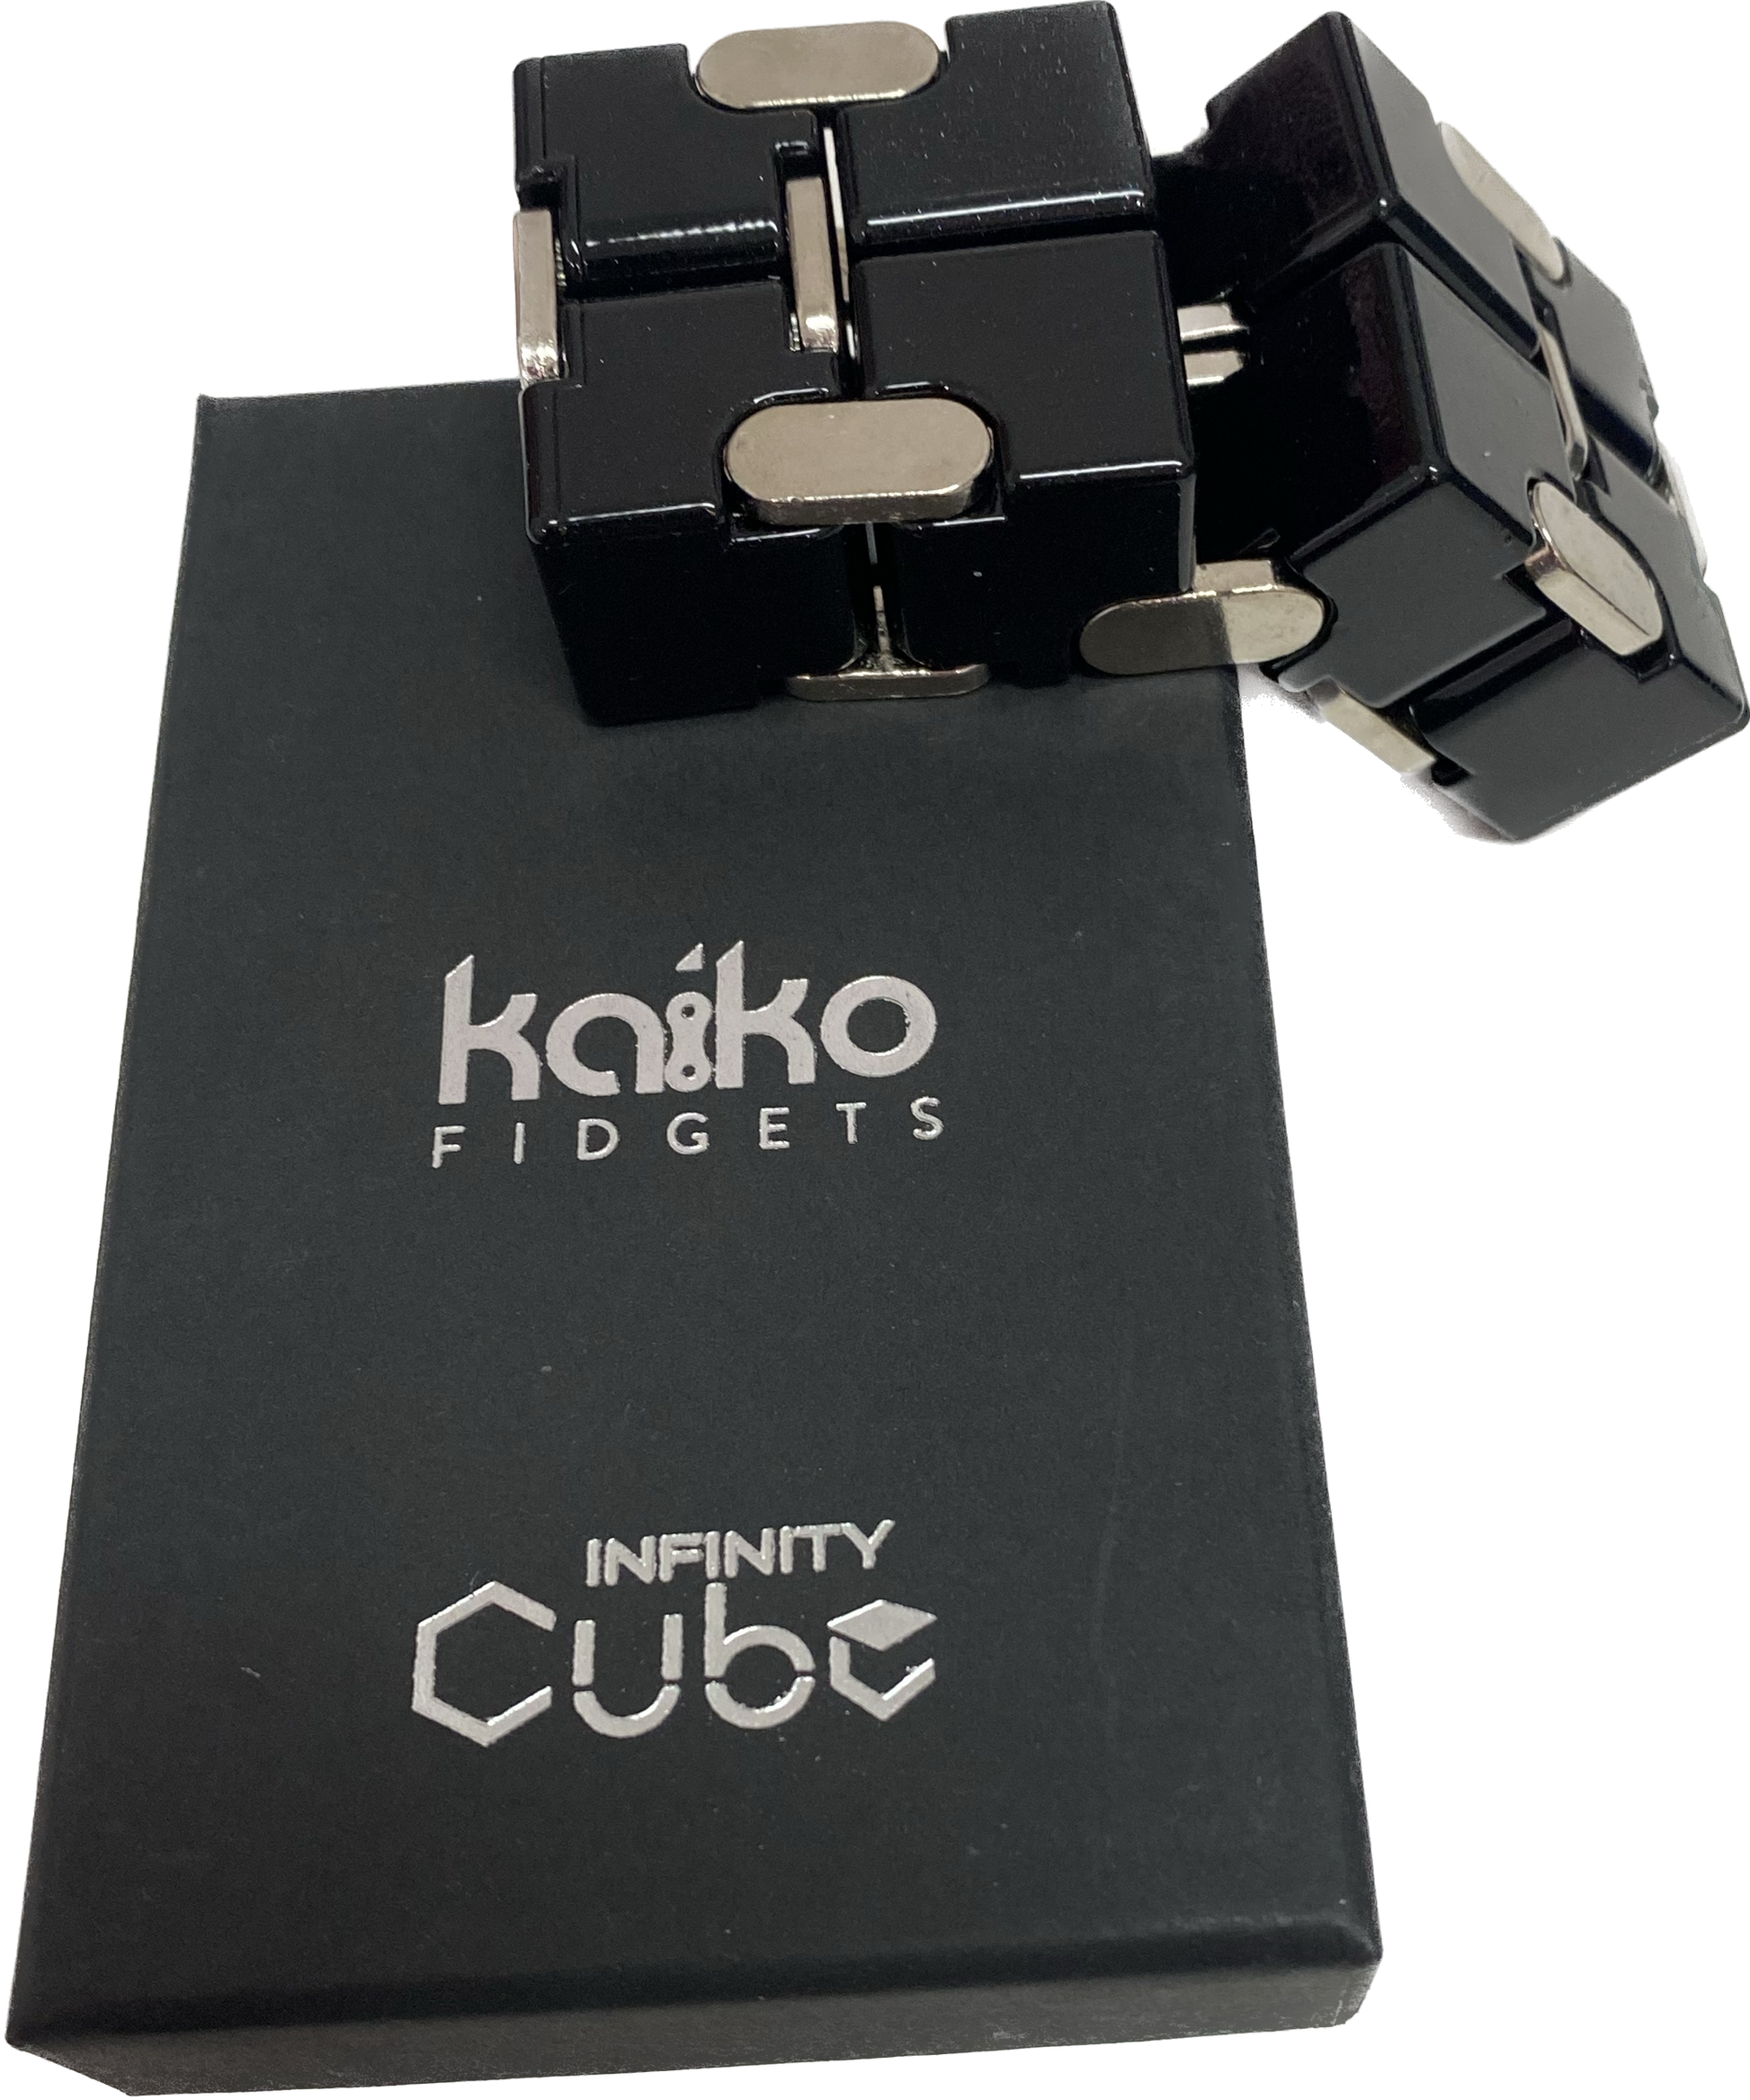 Kaiko Infinity cube fidget